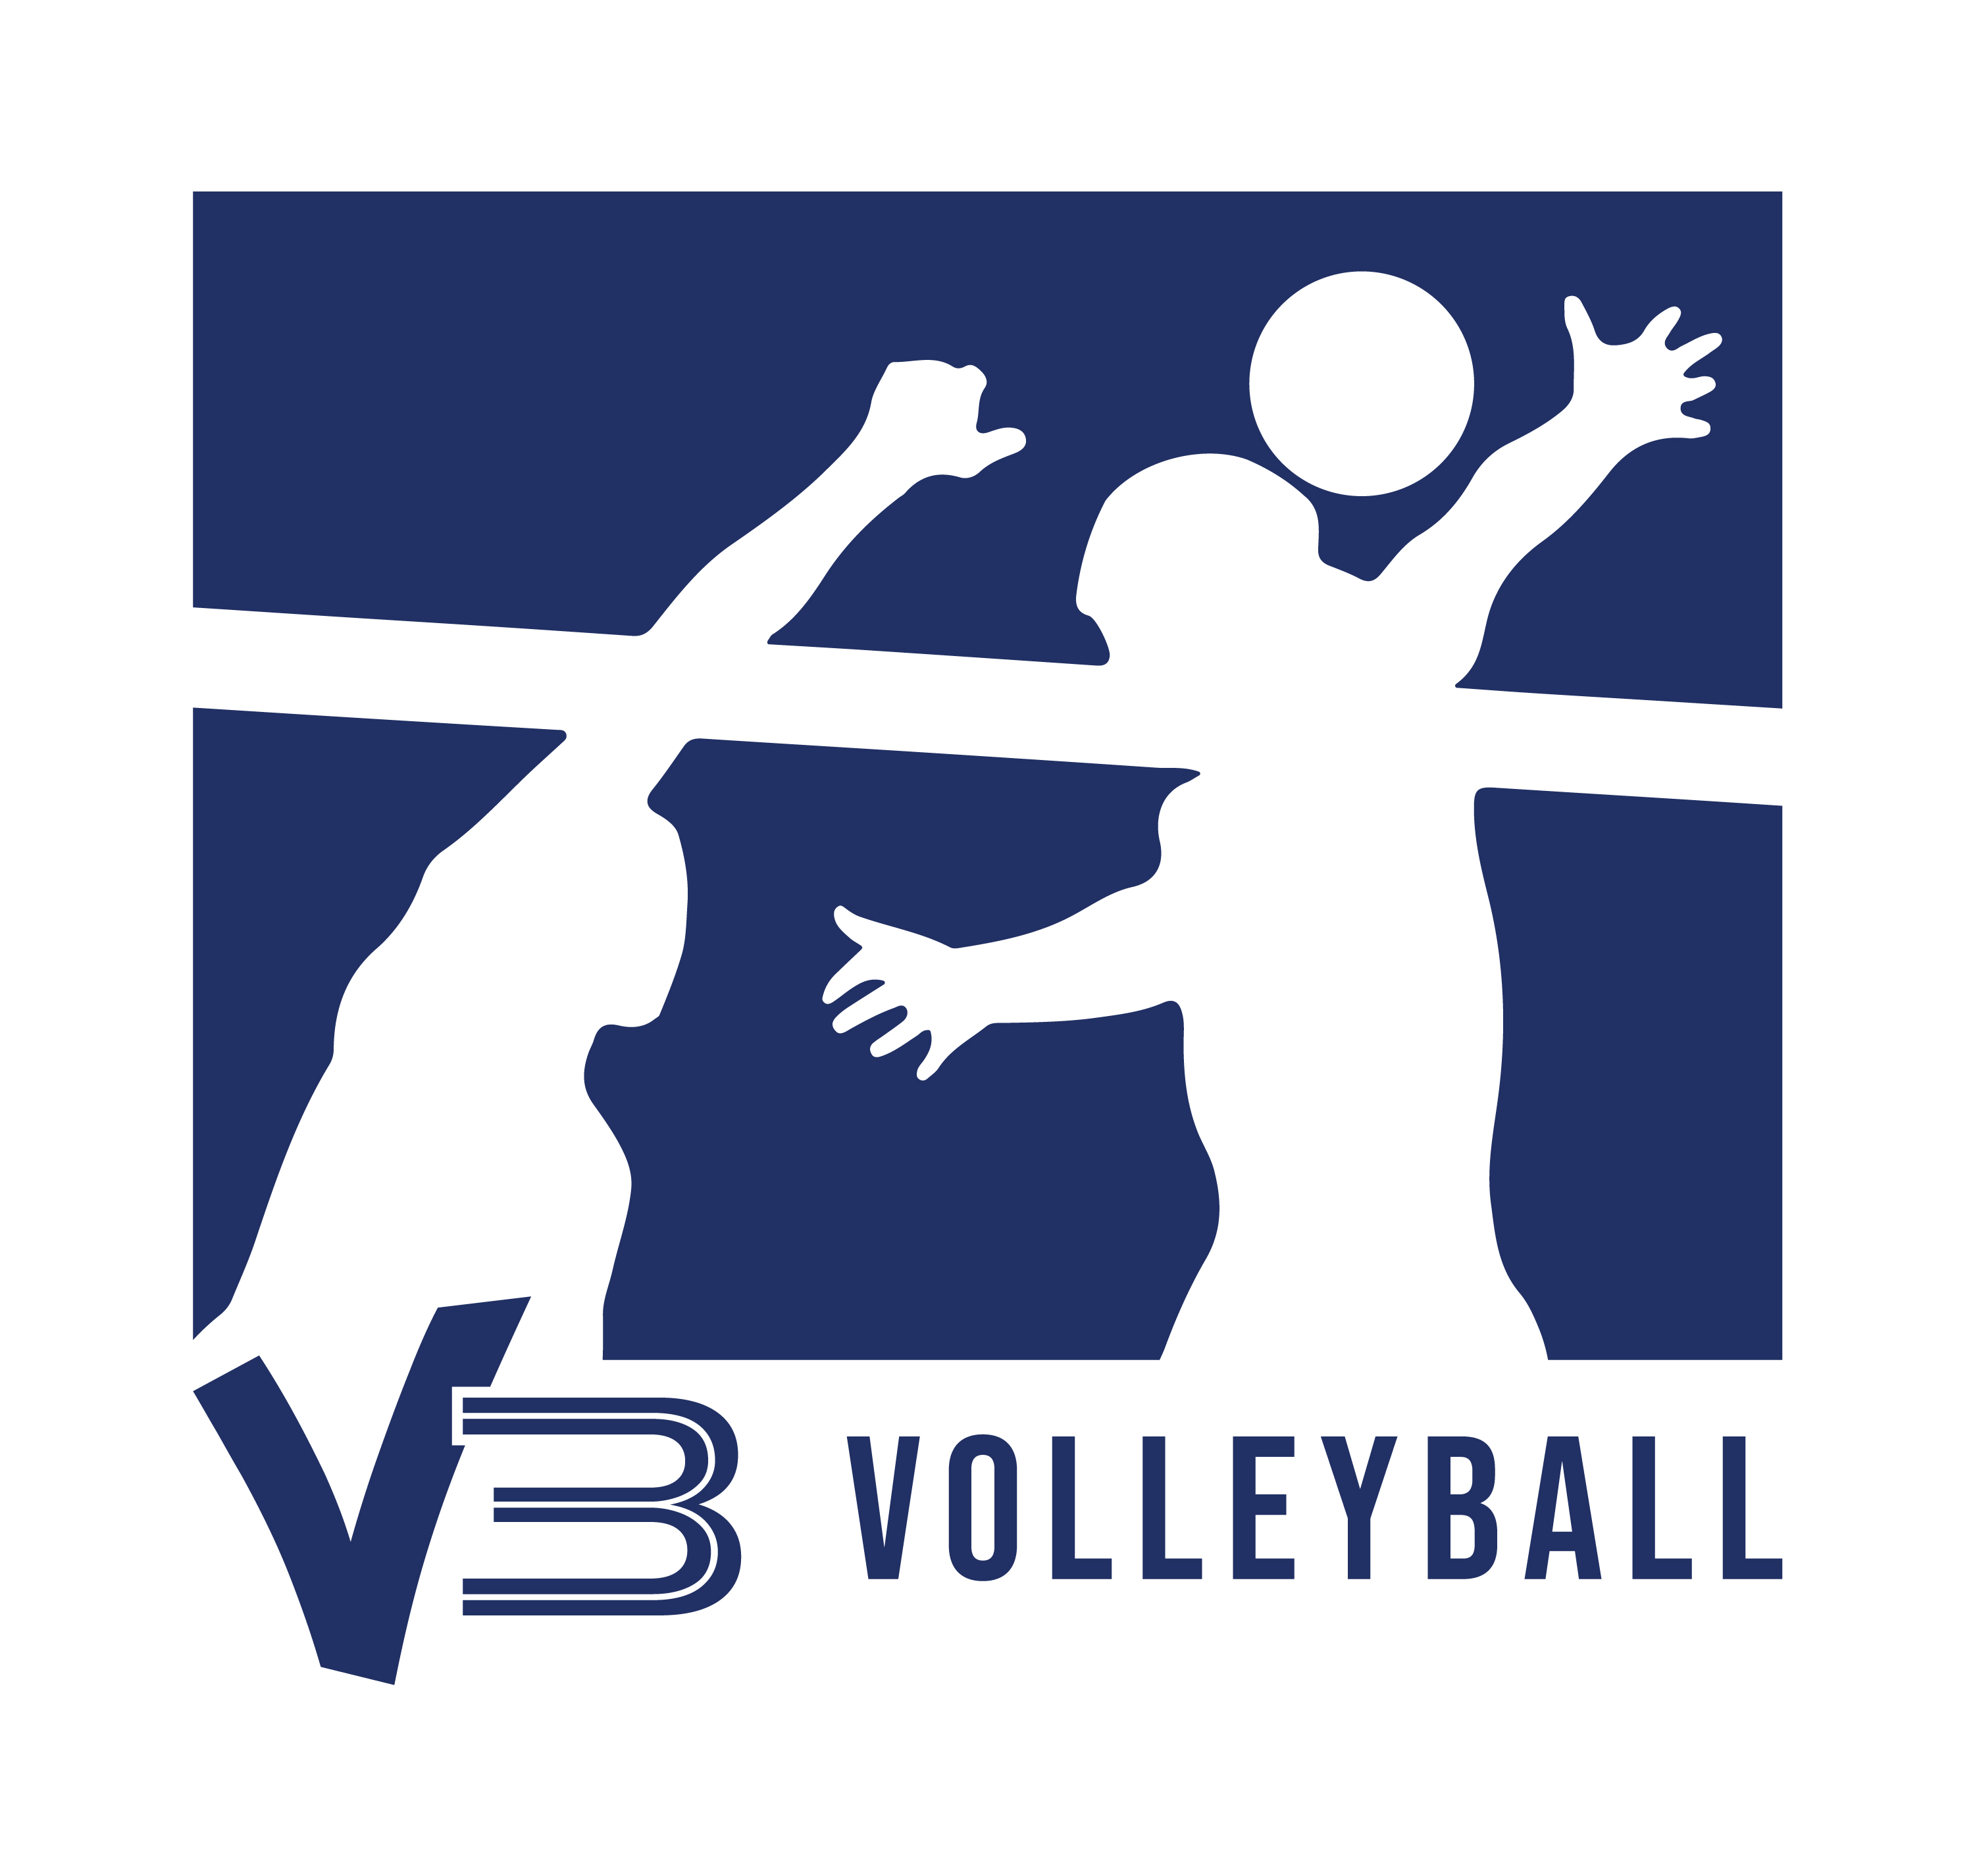 V3 Volleyball